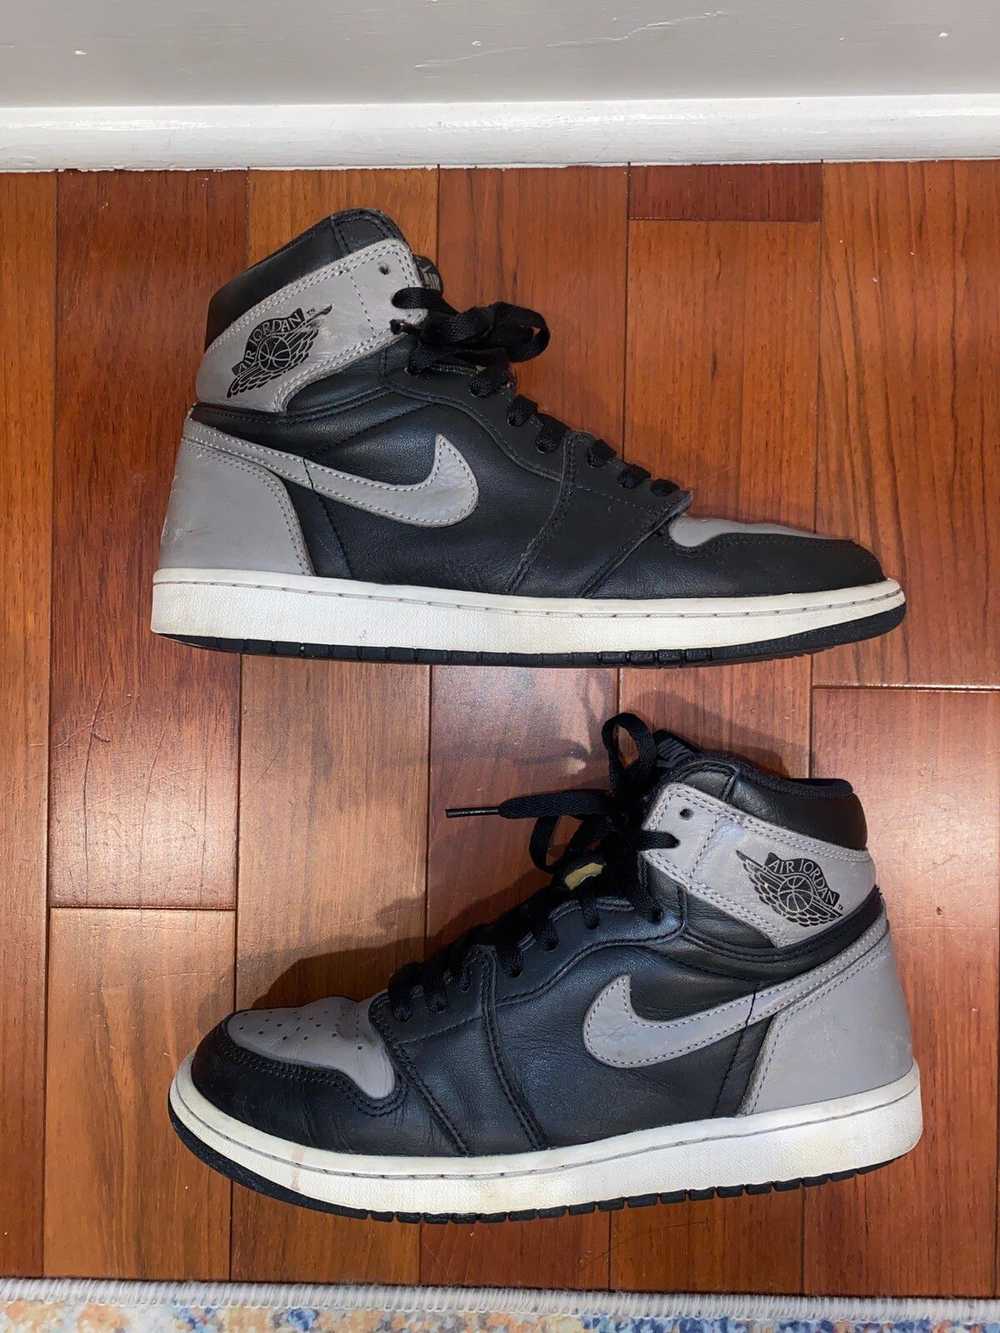 Jordan Brand × Nike 2018 Jordan 1 “Shadow” - image 2